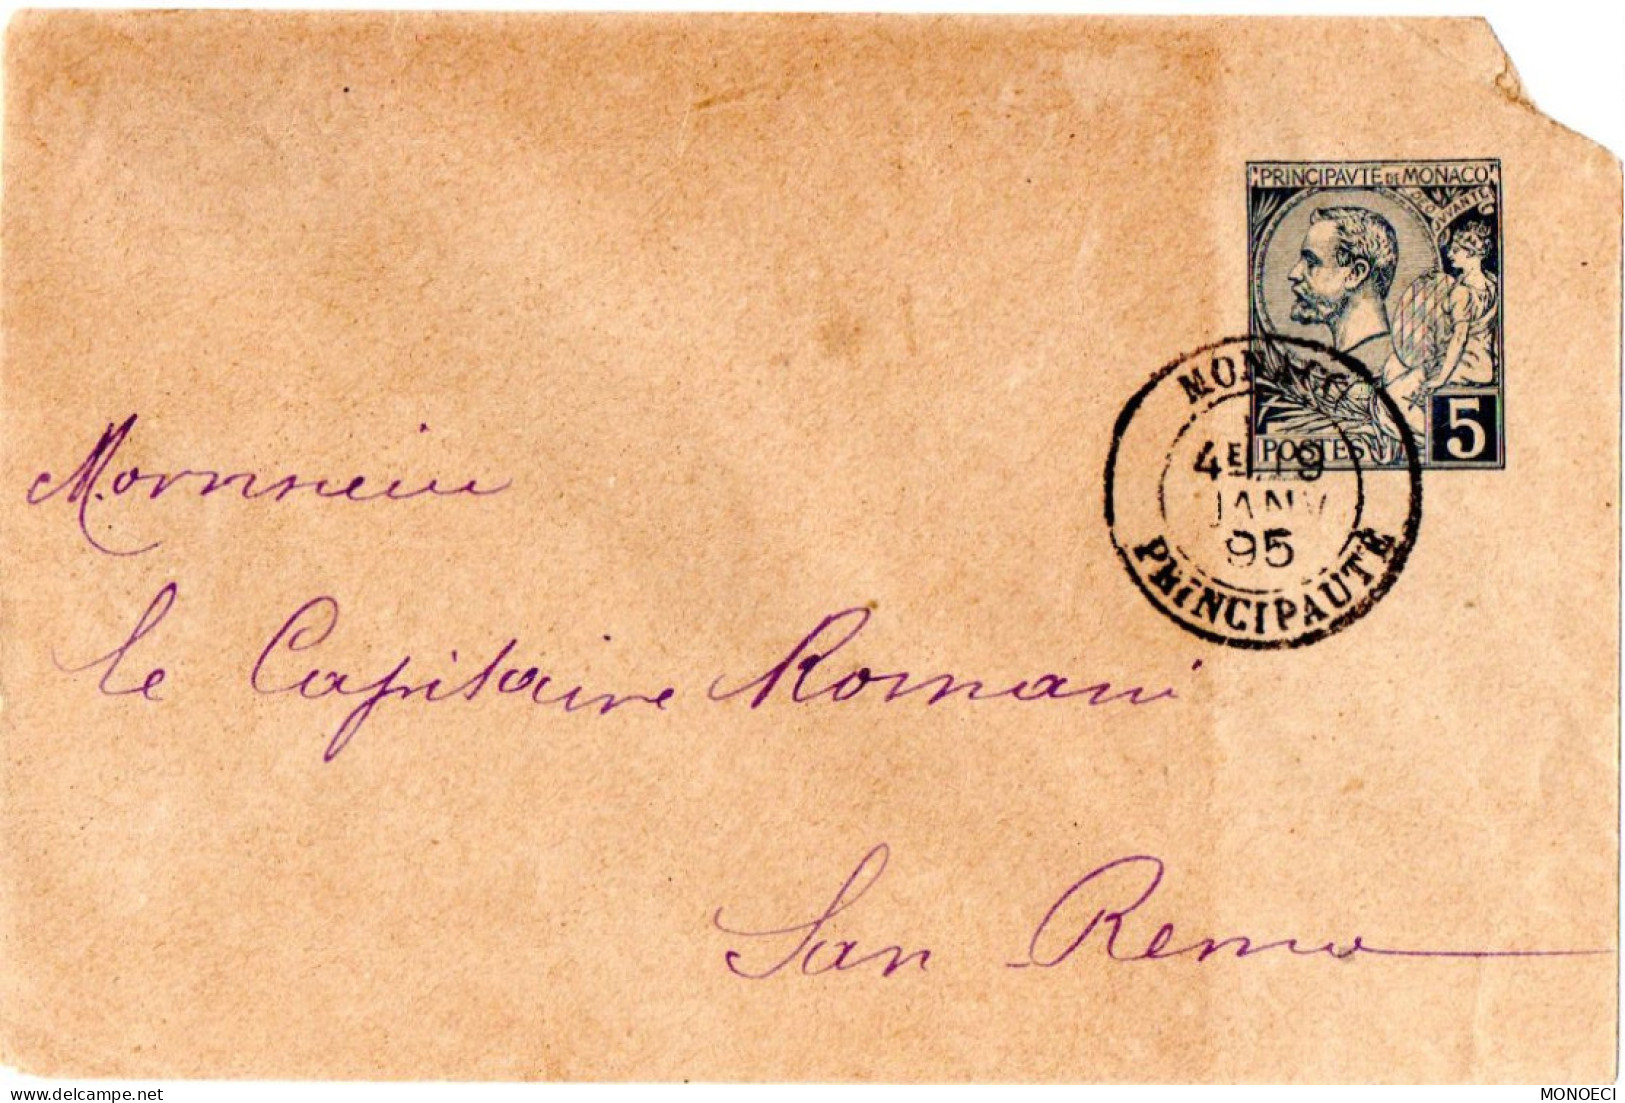 MONACO -- MONTE CARLO -- Entier Postal -- Enveloppe -- Prince Albert 1er -- 5 C. Bleu Sur Bulle 1891 (116 X 76 ) - Entiers Postaux